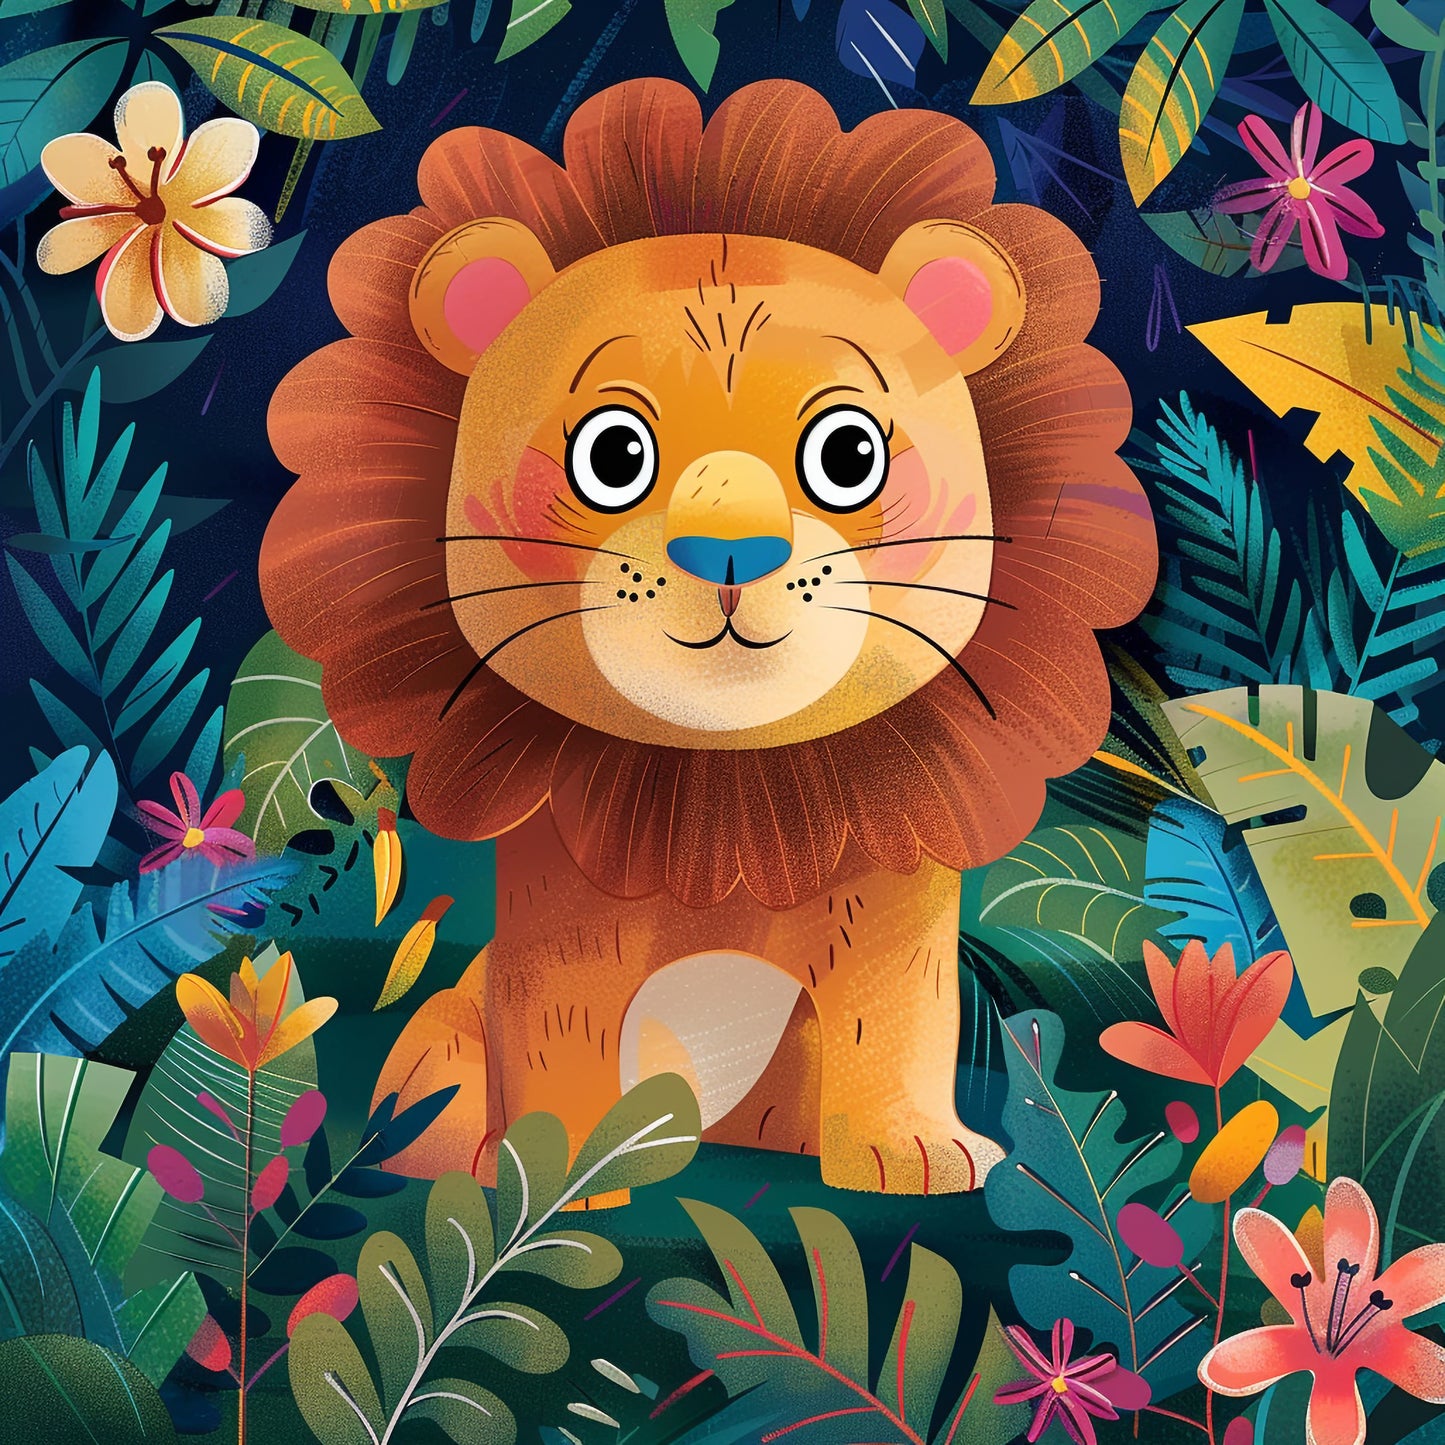 Friendly Cartoon Lion in a Vibrant Jungle Illustration